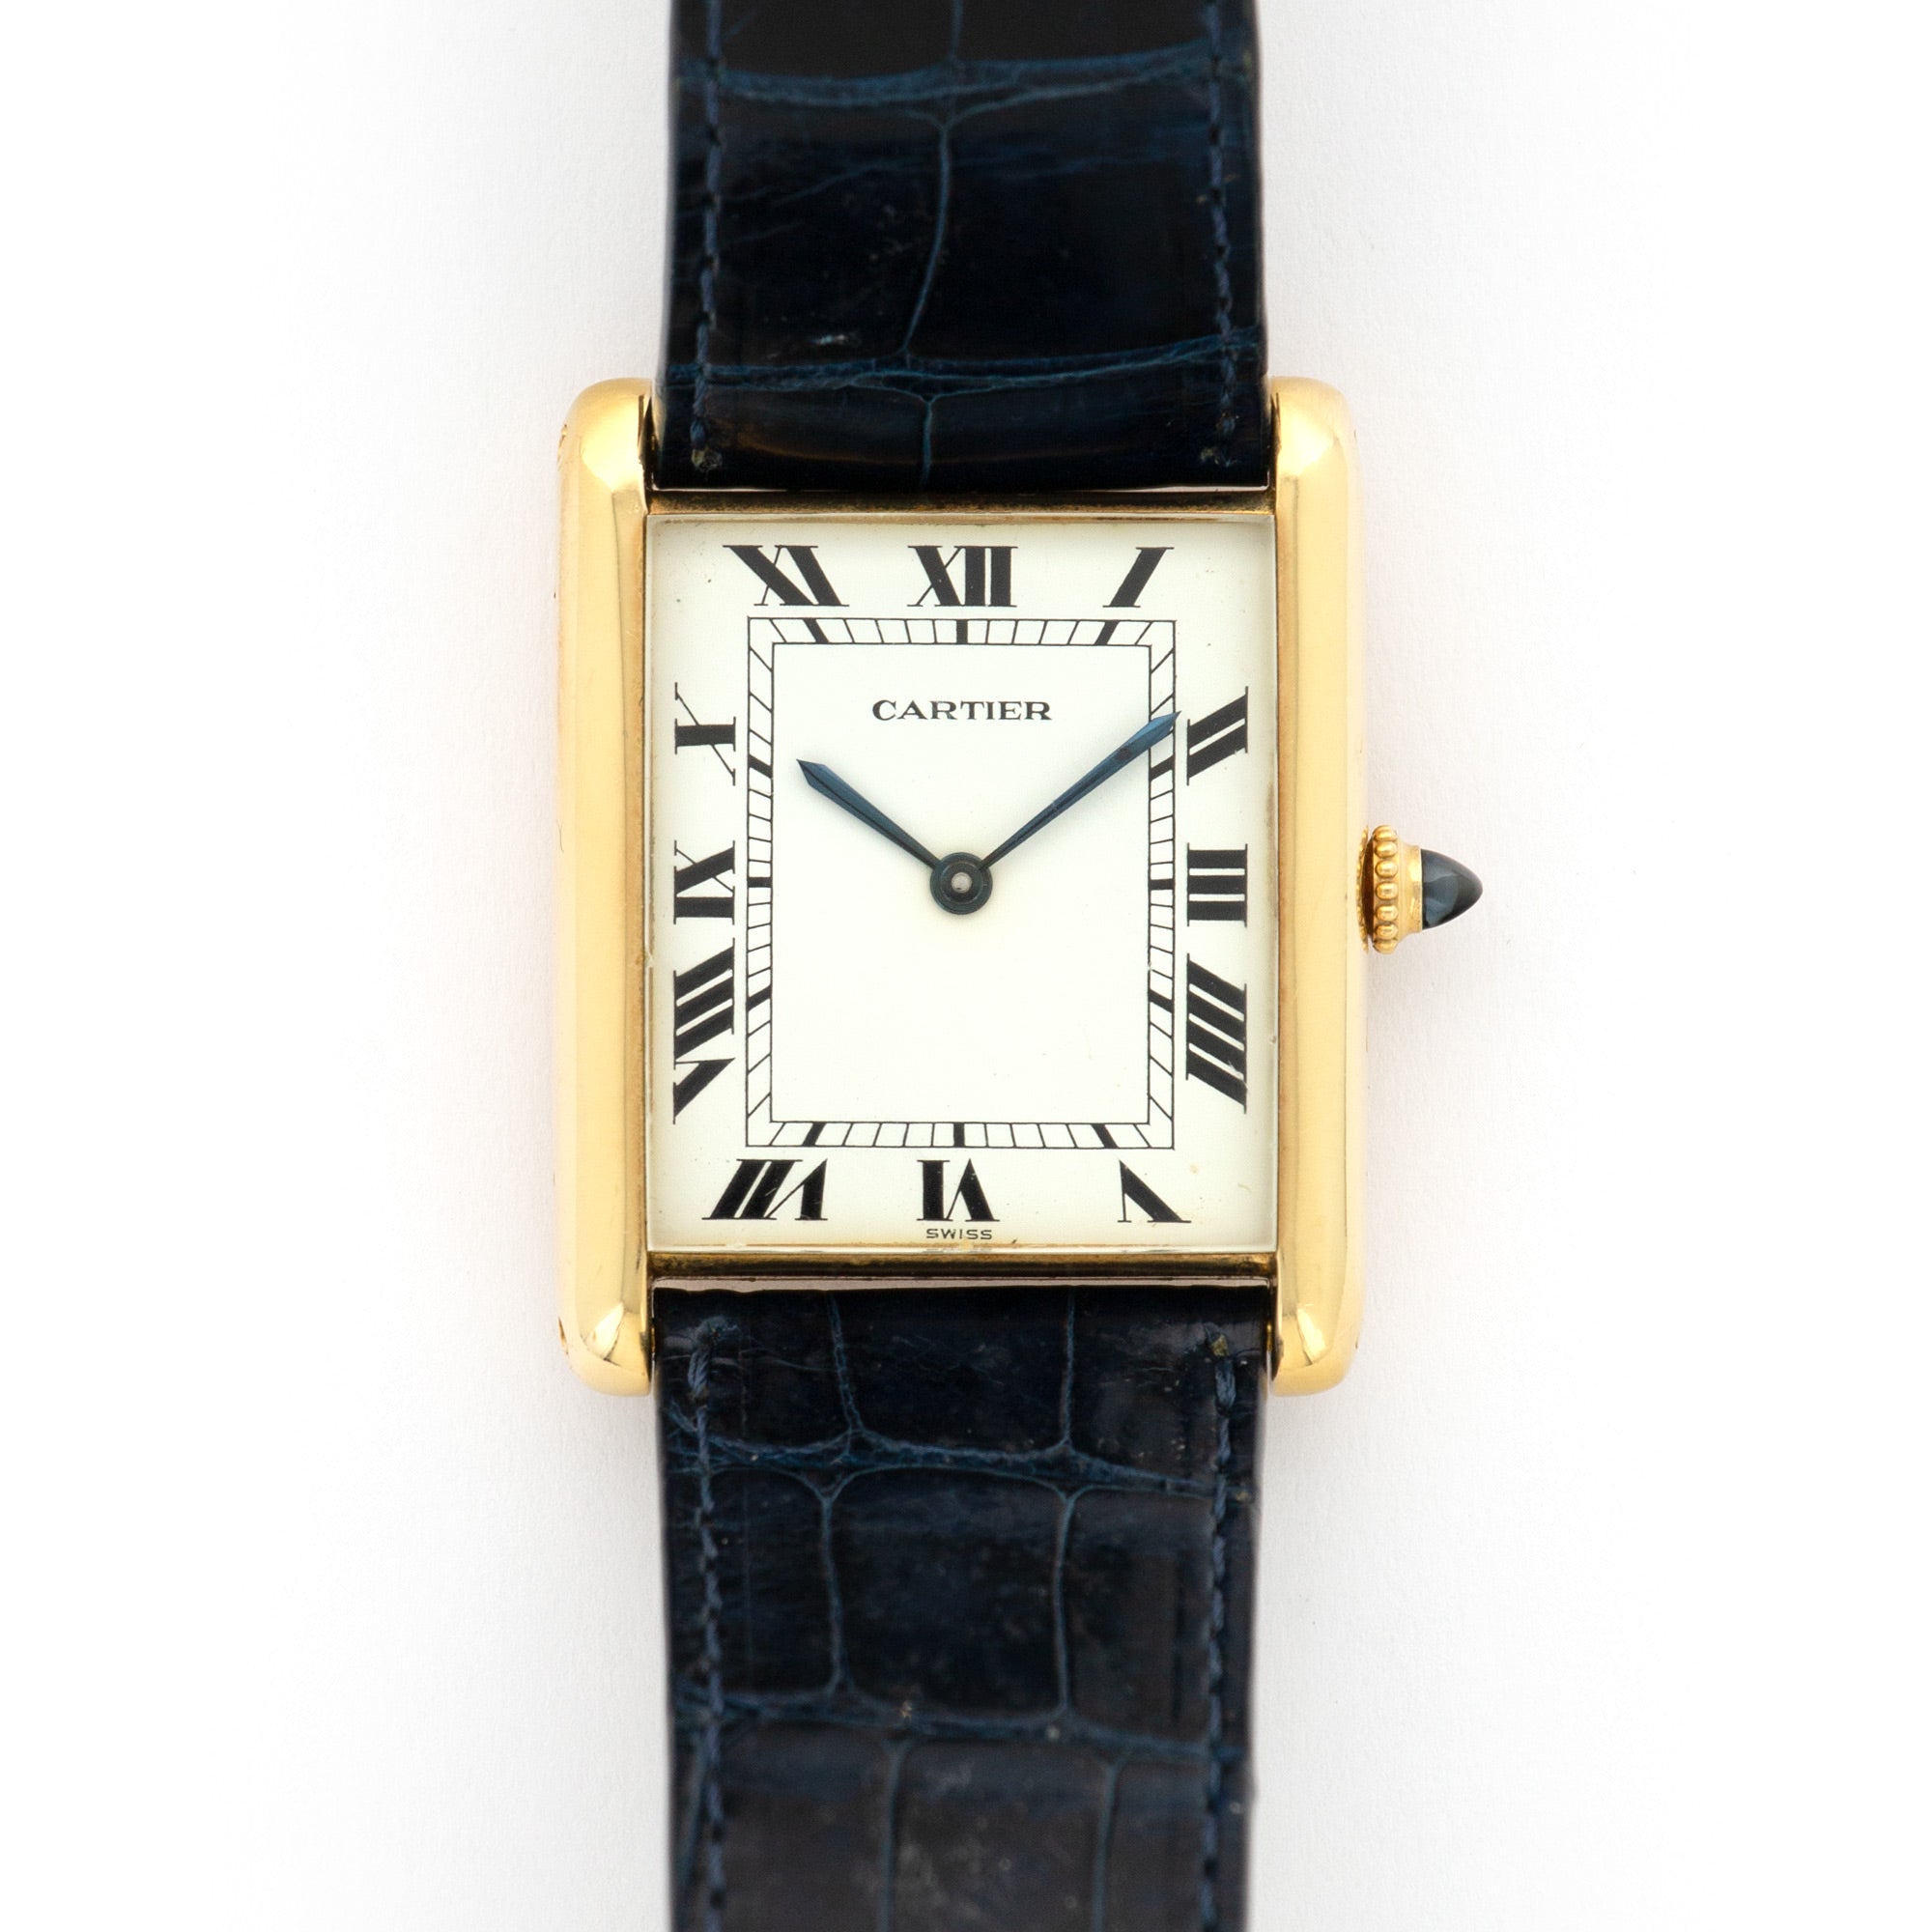 Cartier - Cartier Yellow Gold Jumbo Tank Automatic Watch - The Keystone Watches